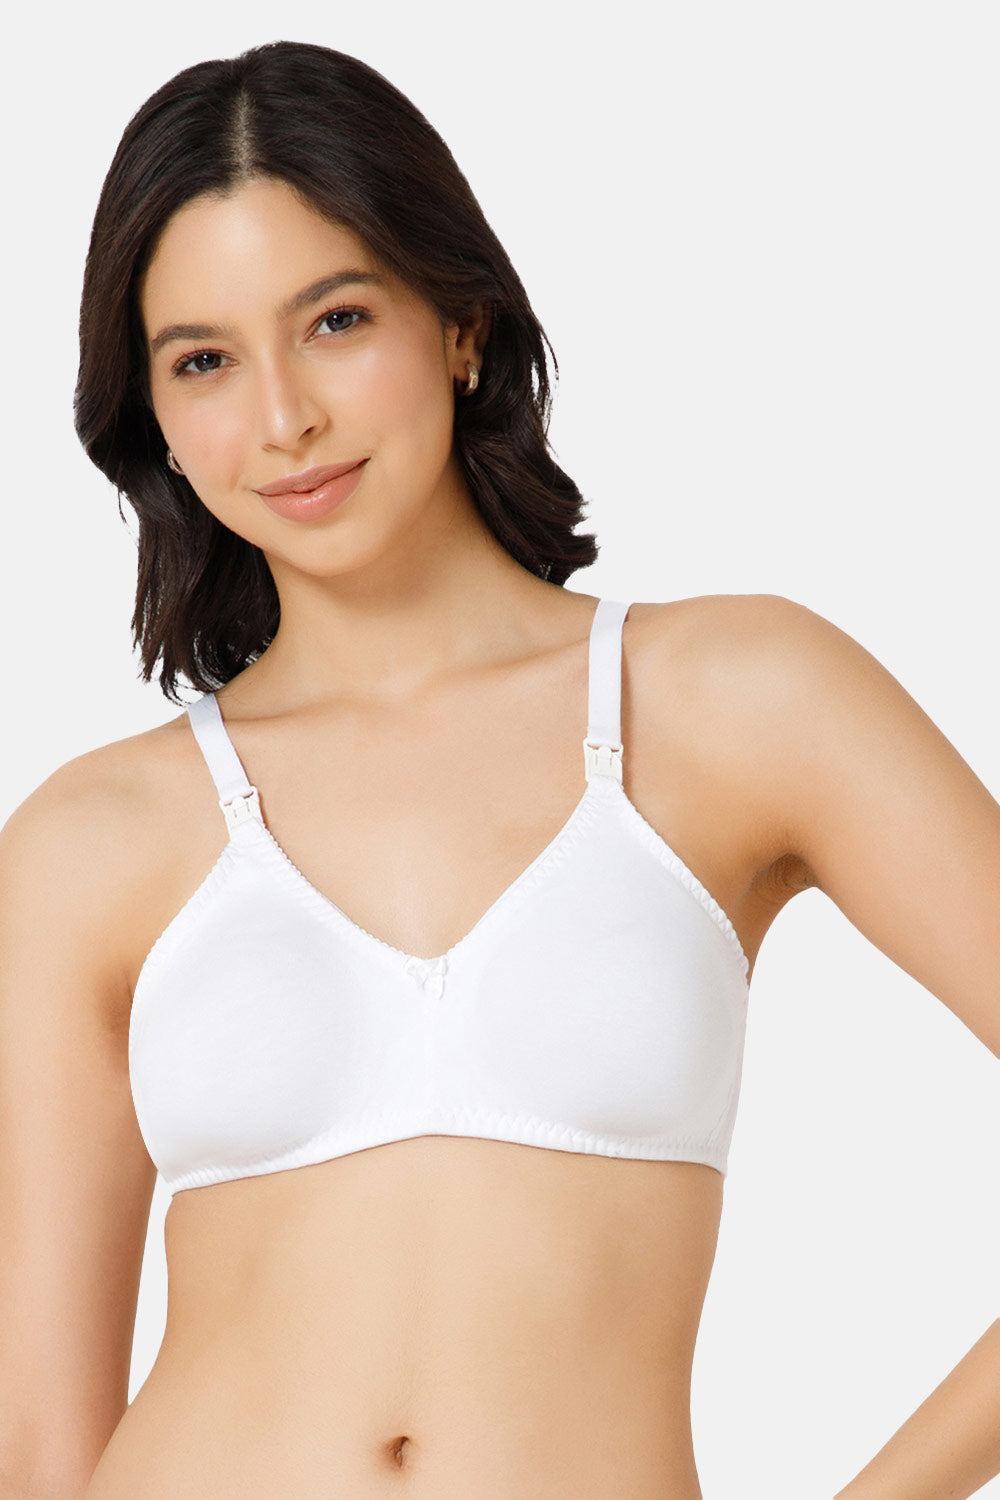 T-Shirt Ladies White Nora Net Non Padded Bra, Size: 30B, Plain at